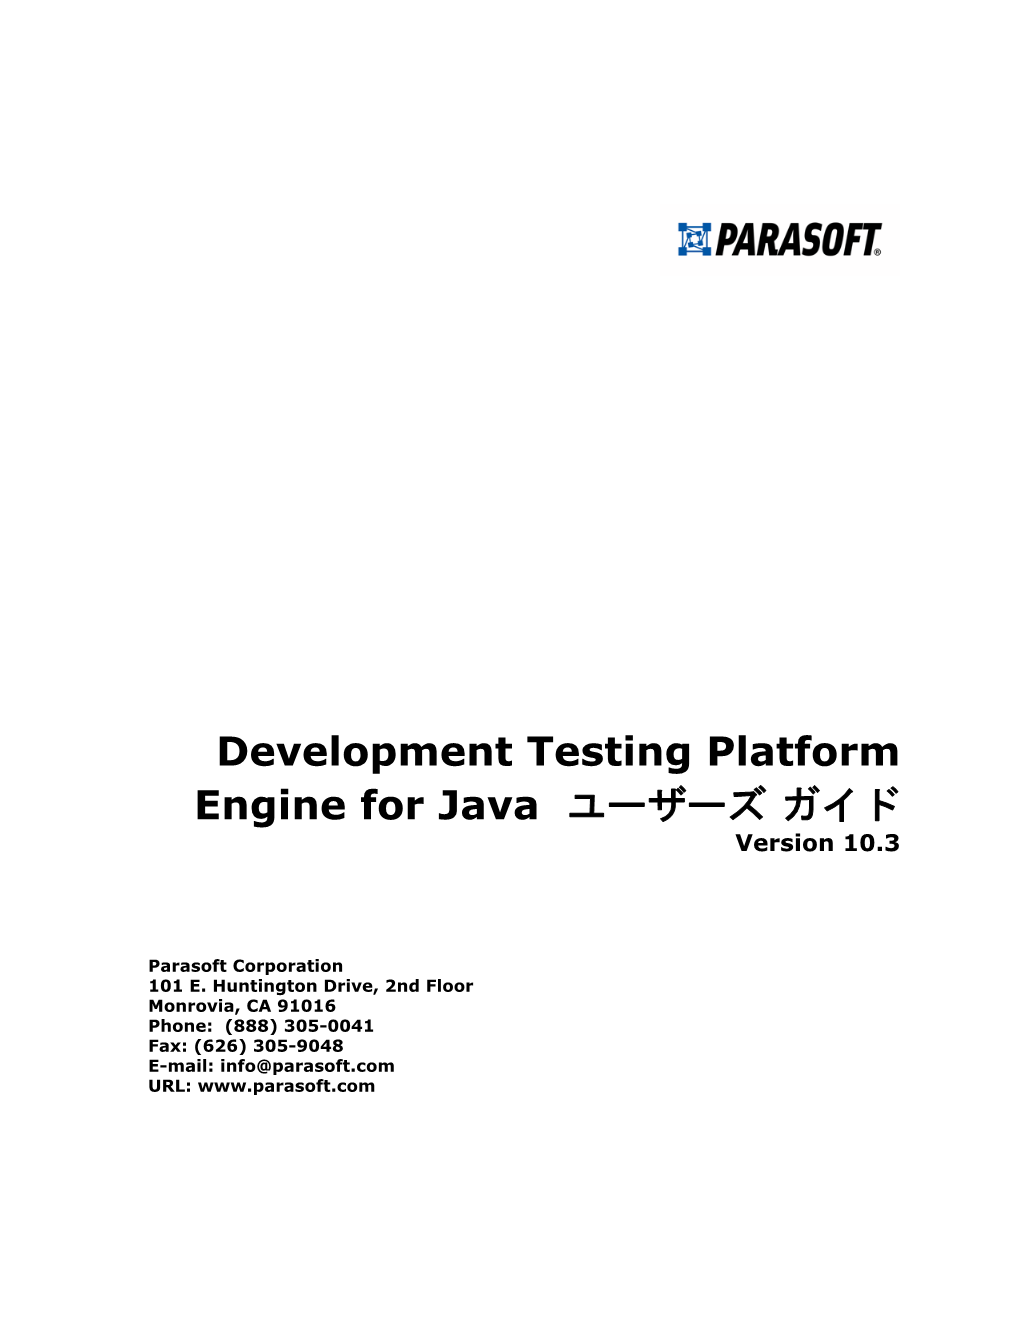 Development Testing Platform Engine for Java ユーザーズガイド